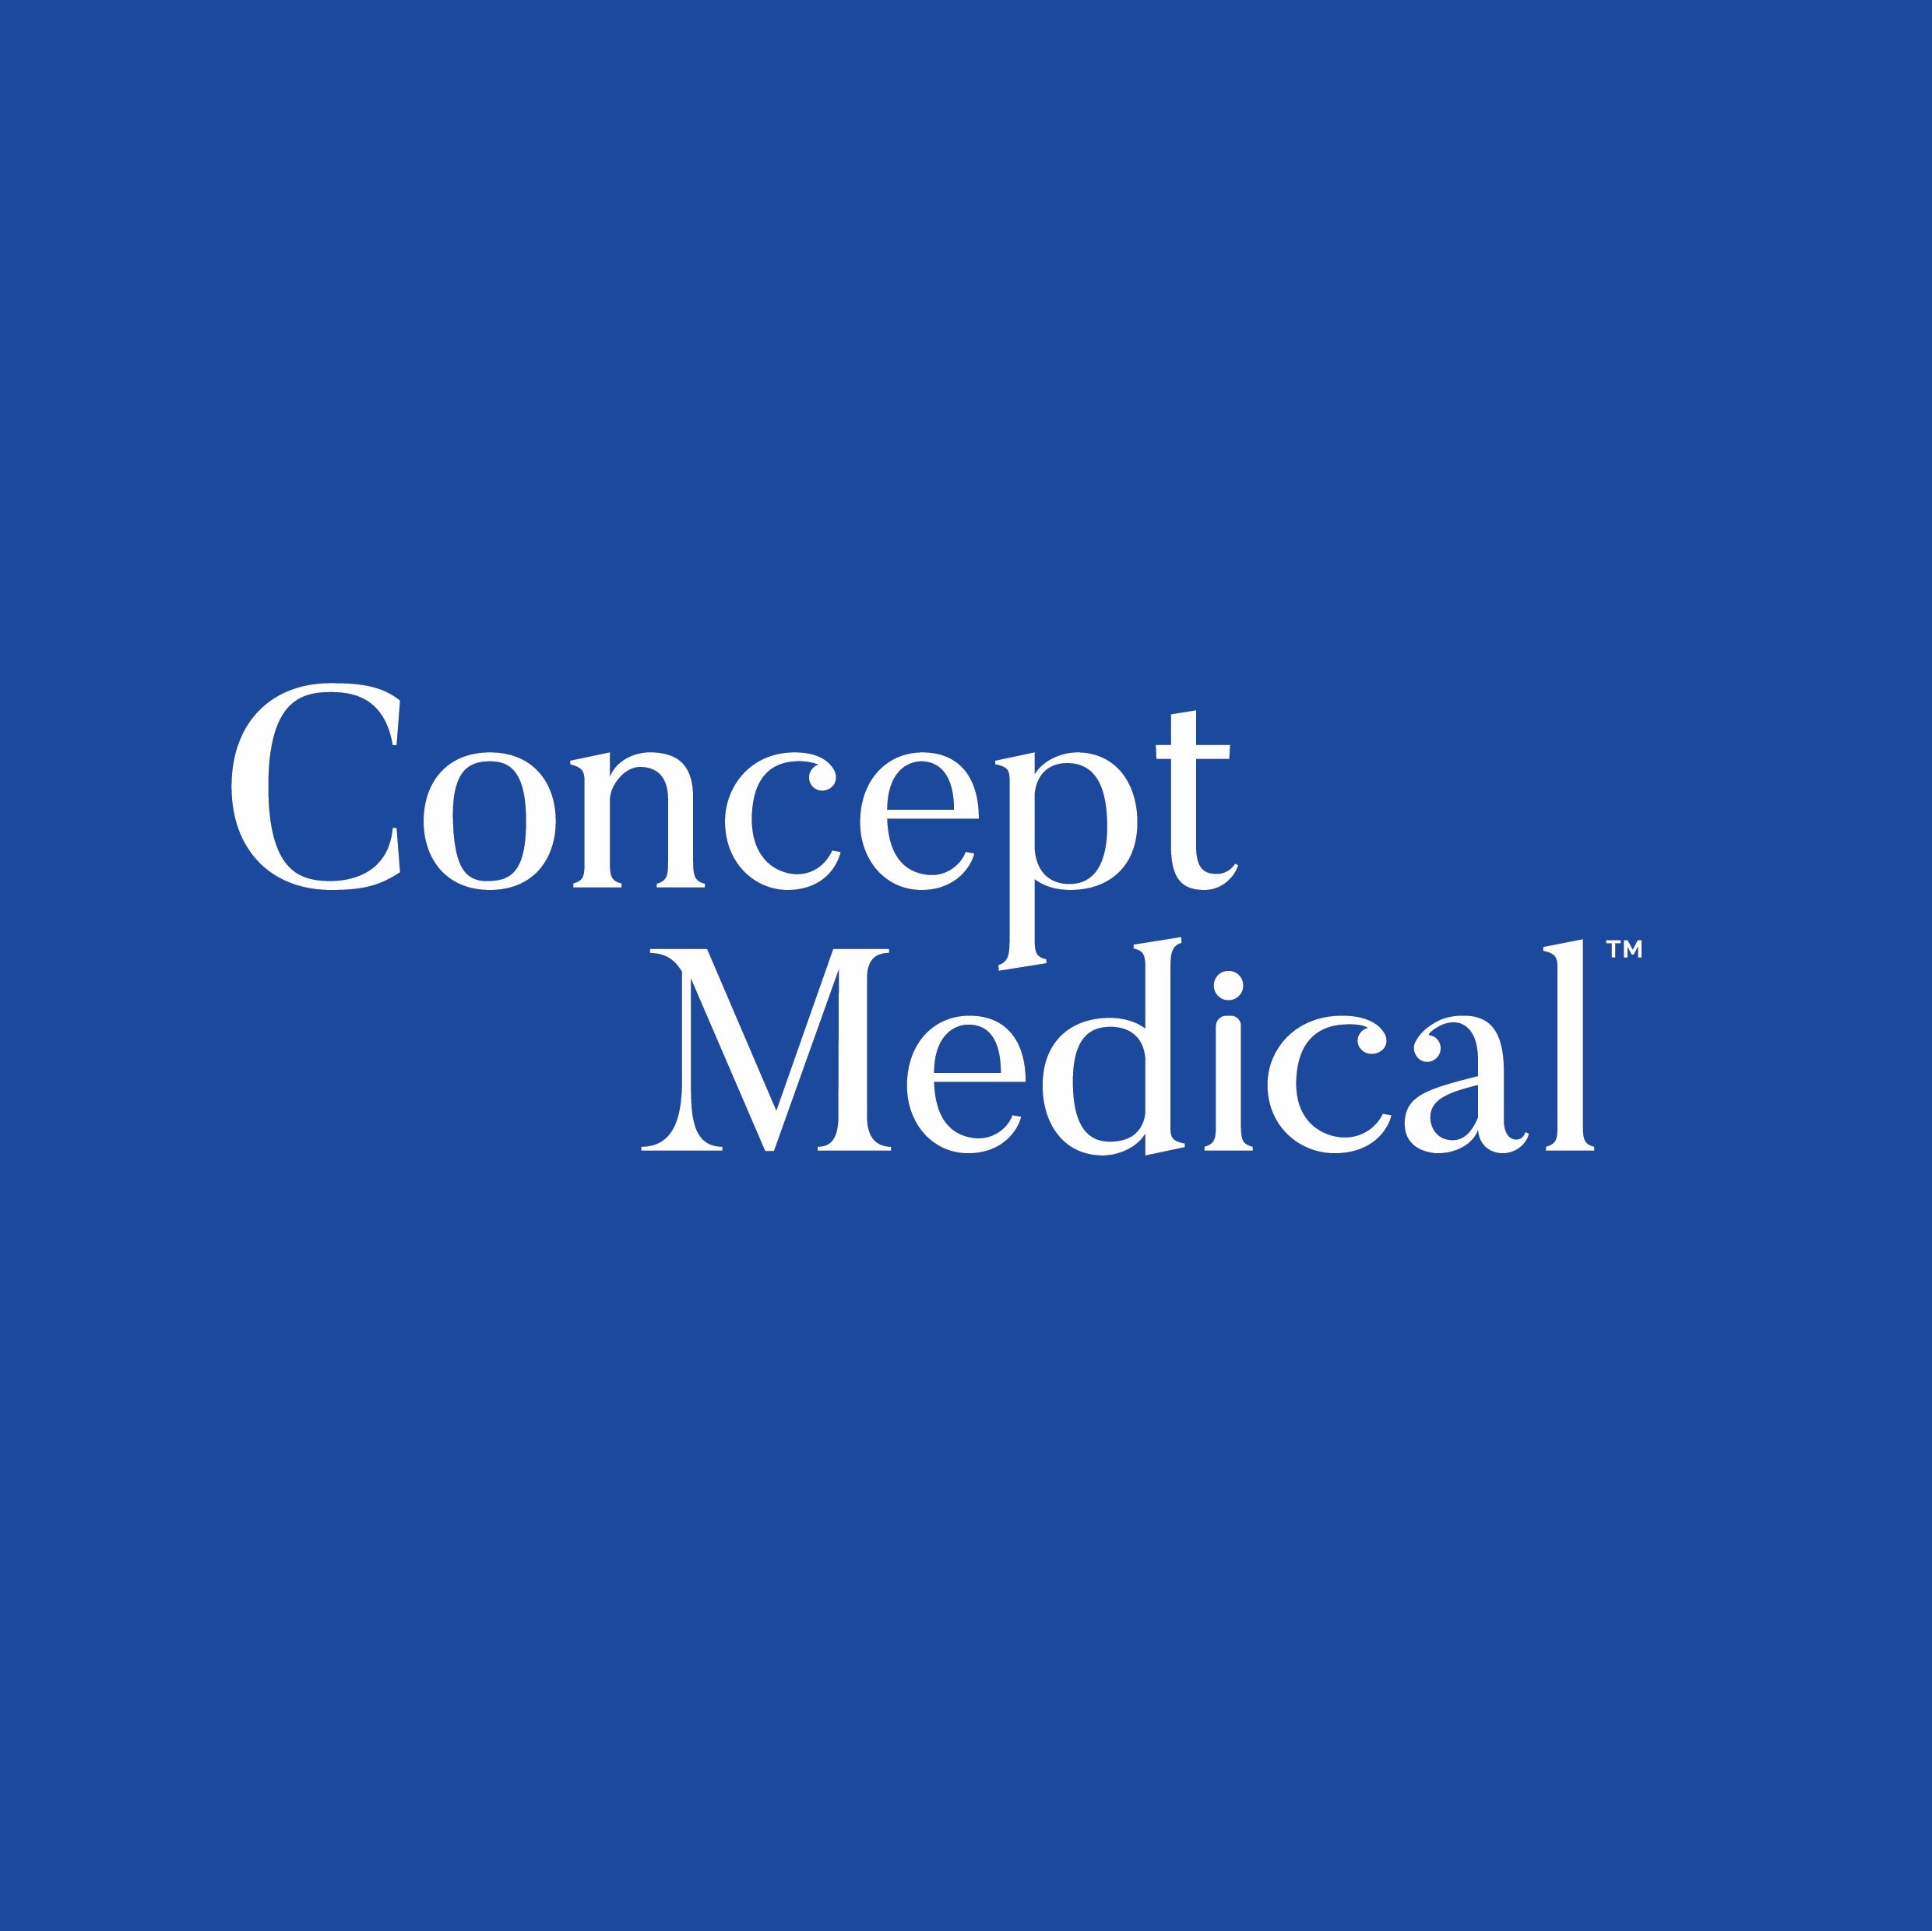 Concept Medical Inc. Granted 'Breakthrough Device Designation' From FDA ...